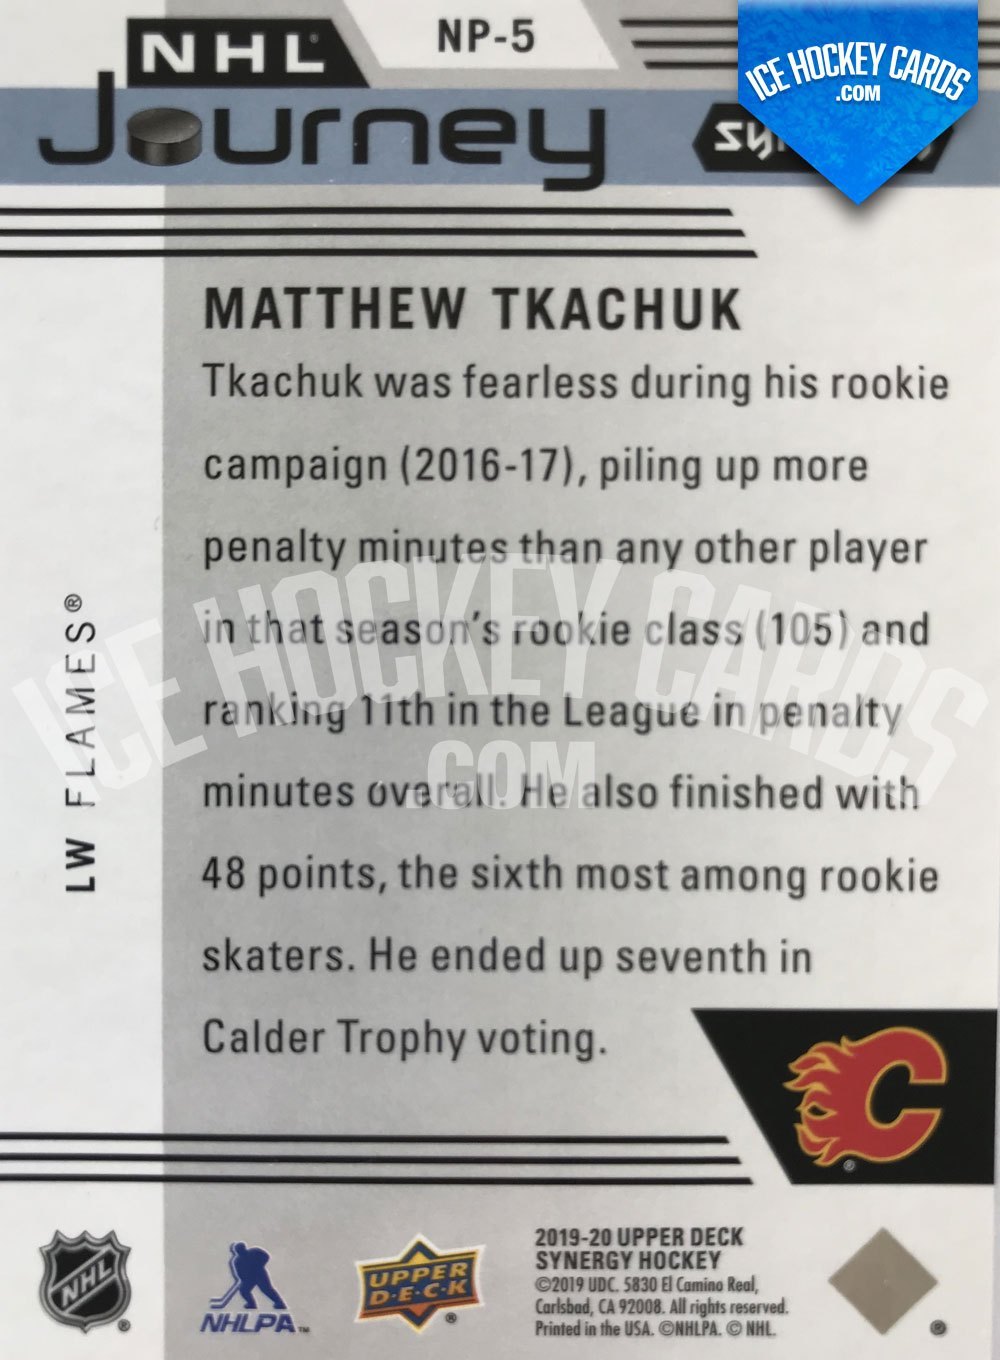 Upper Deck - Synergy 19-20 - Matthew Tkachuk NHL Journey back